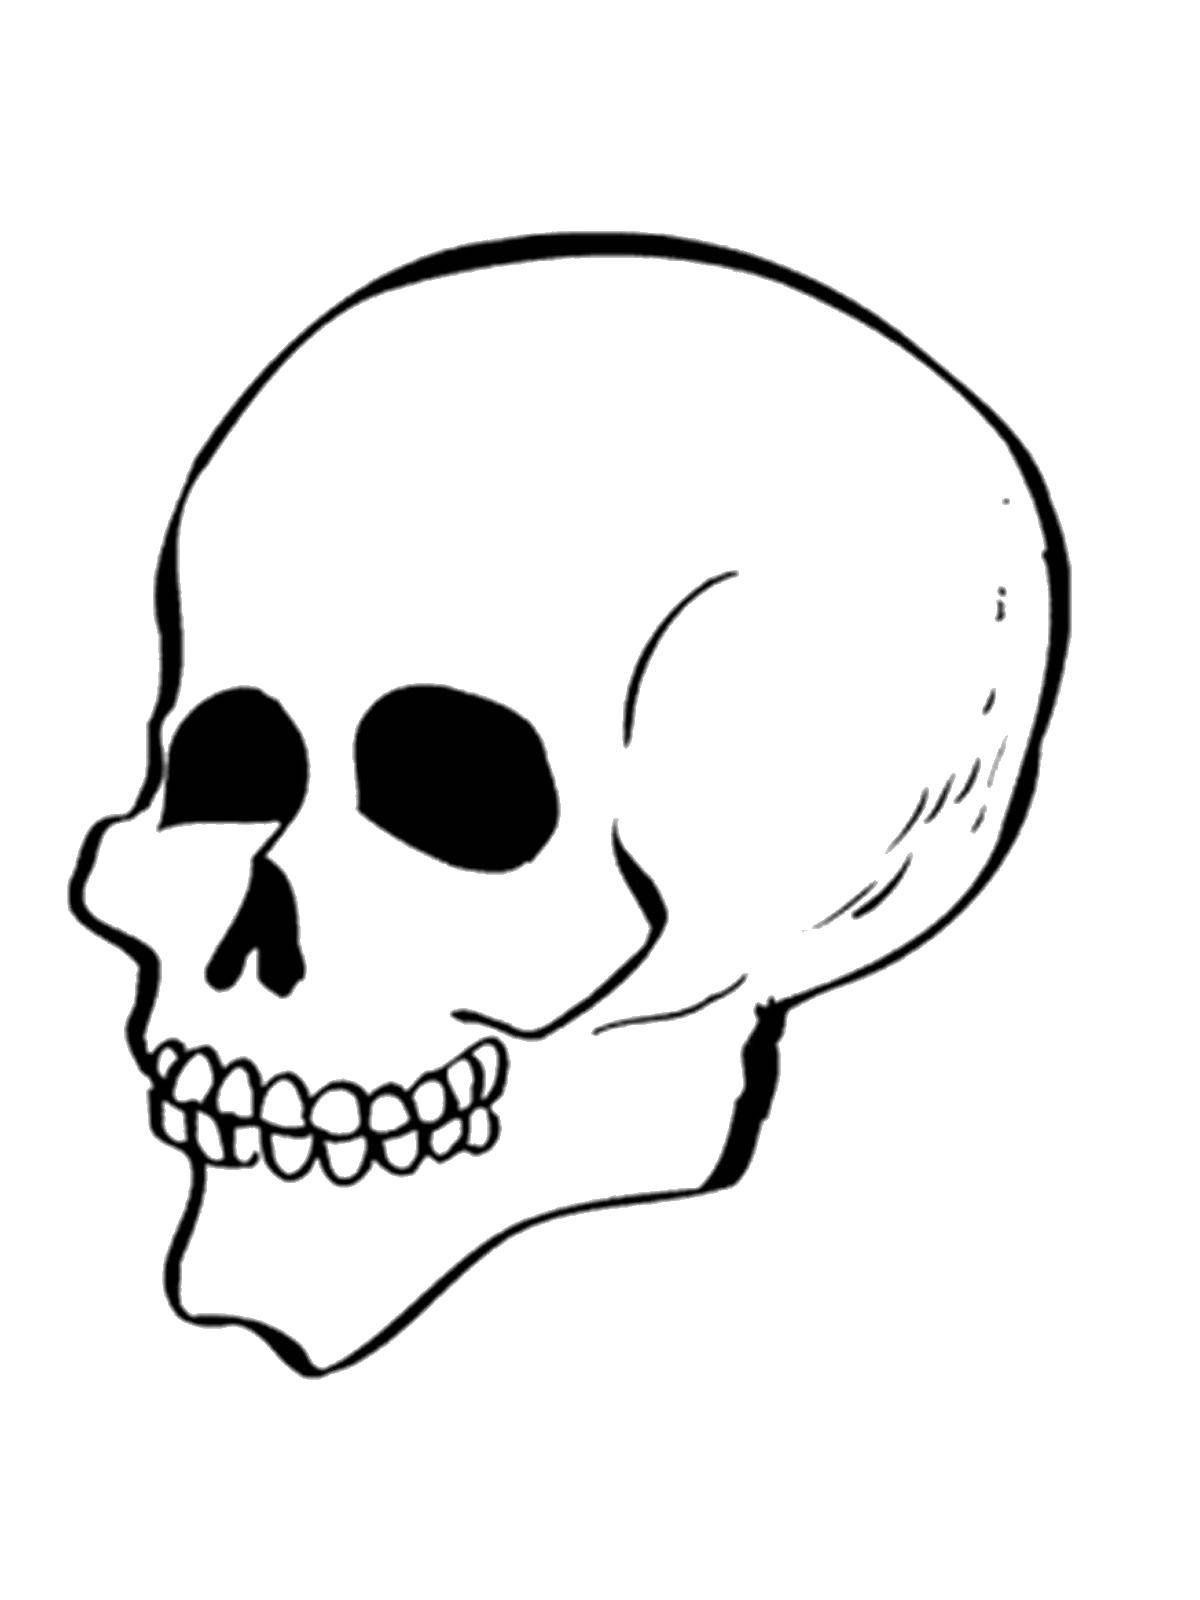 Coloring Skull. Category skull. Tags:  The body of a man , skull.